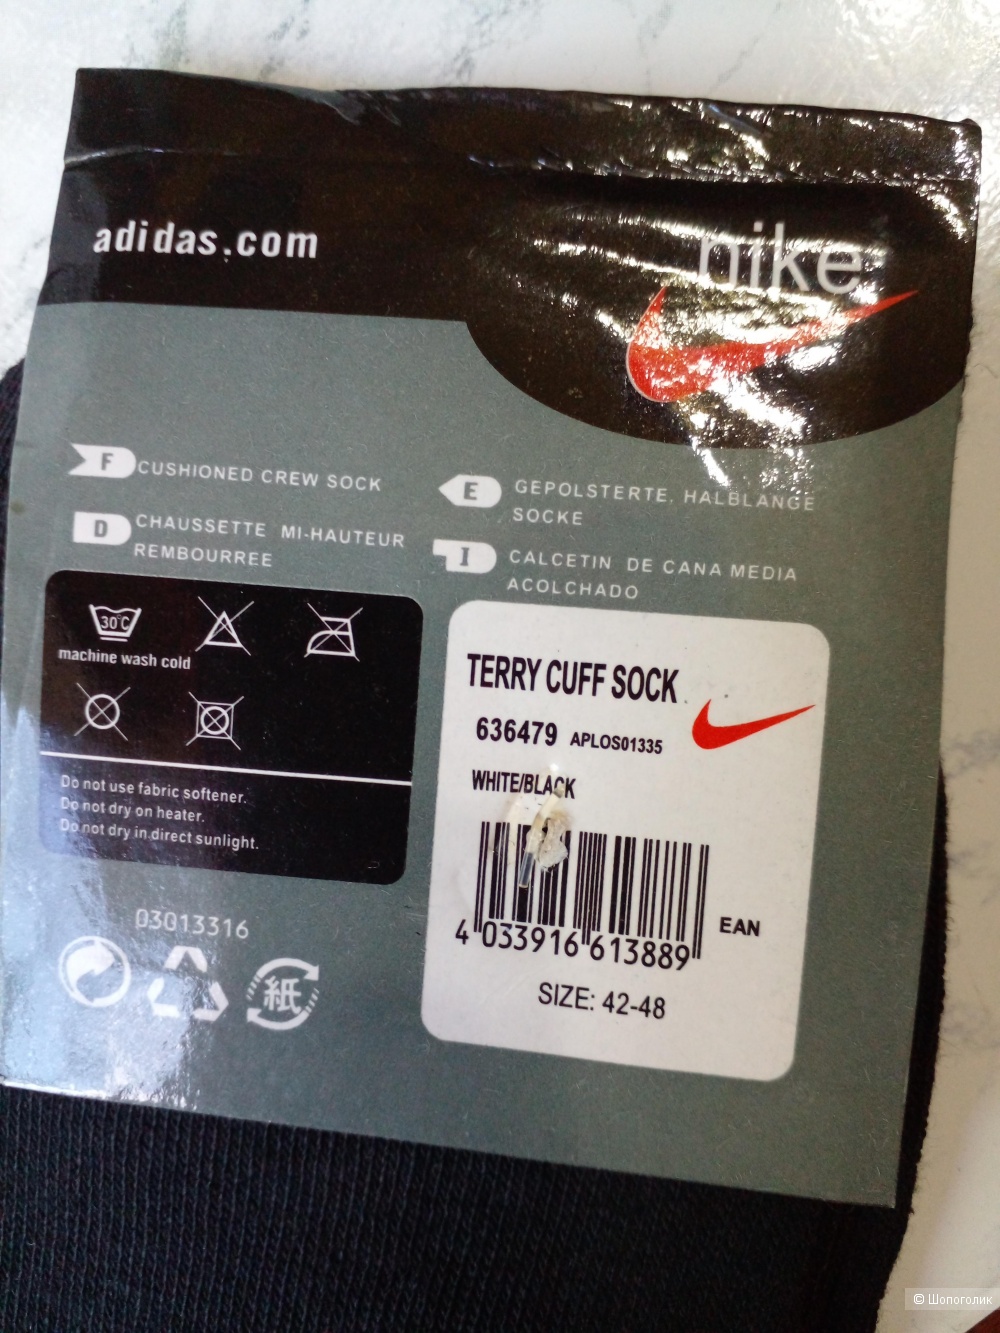 Комплект носков Hugo Boss, Dilek, Nike, р-р 42-48